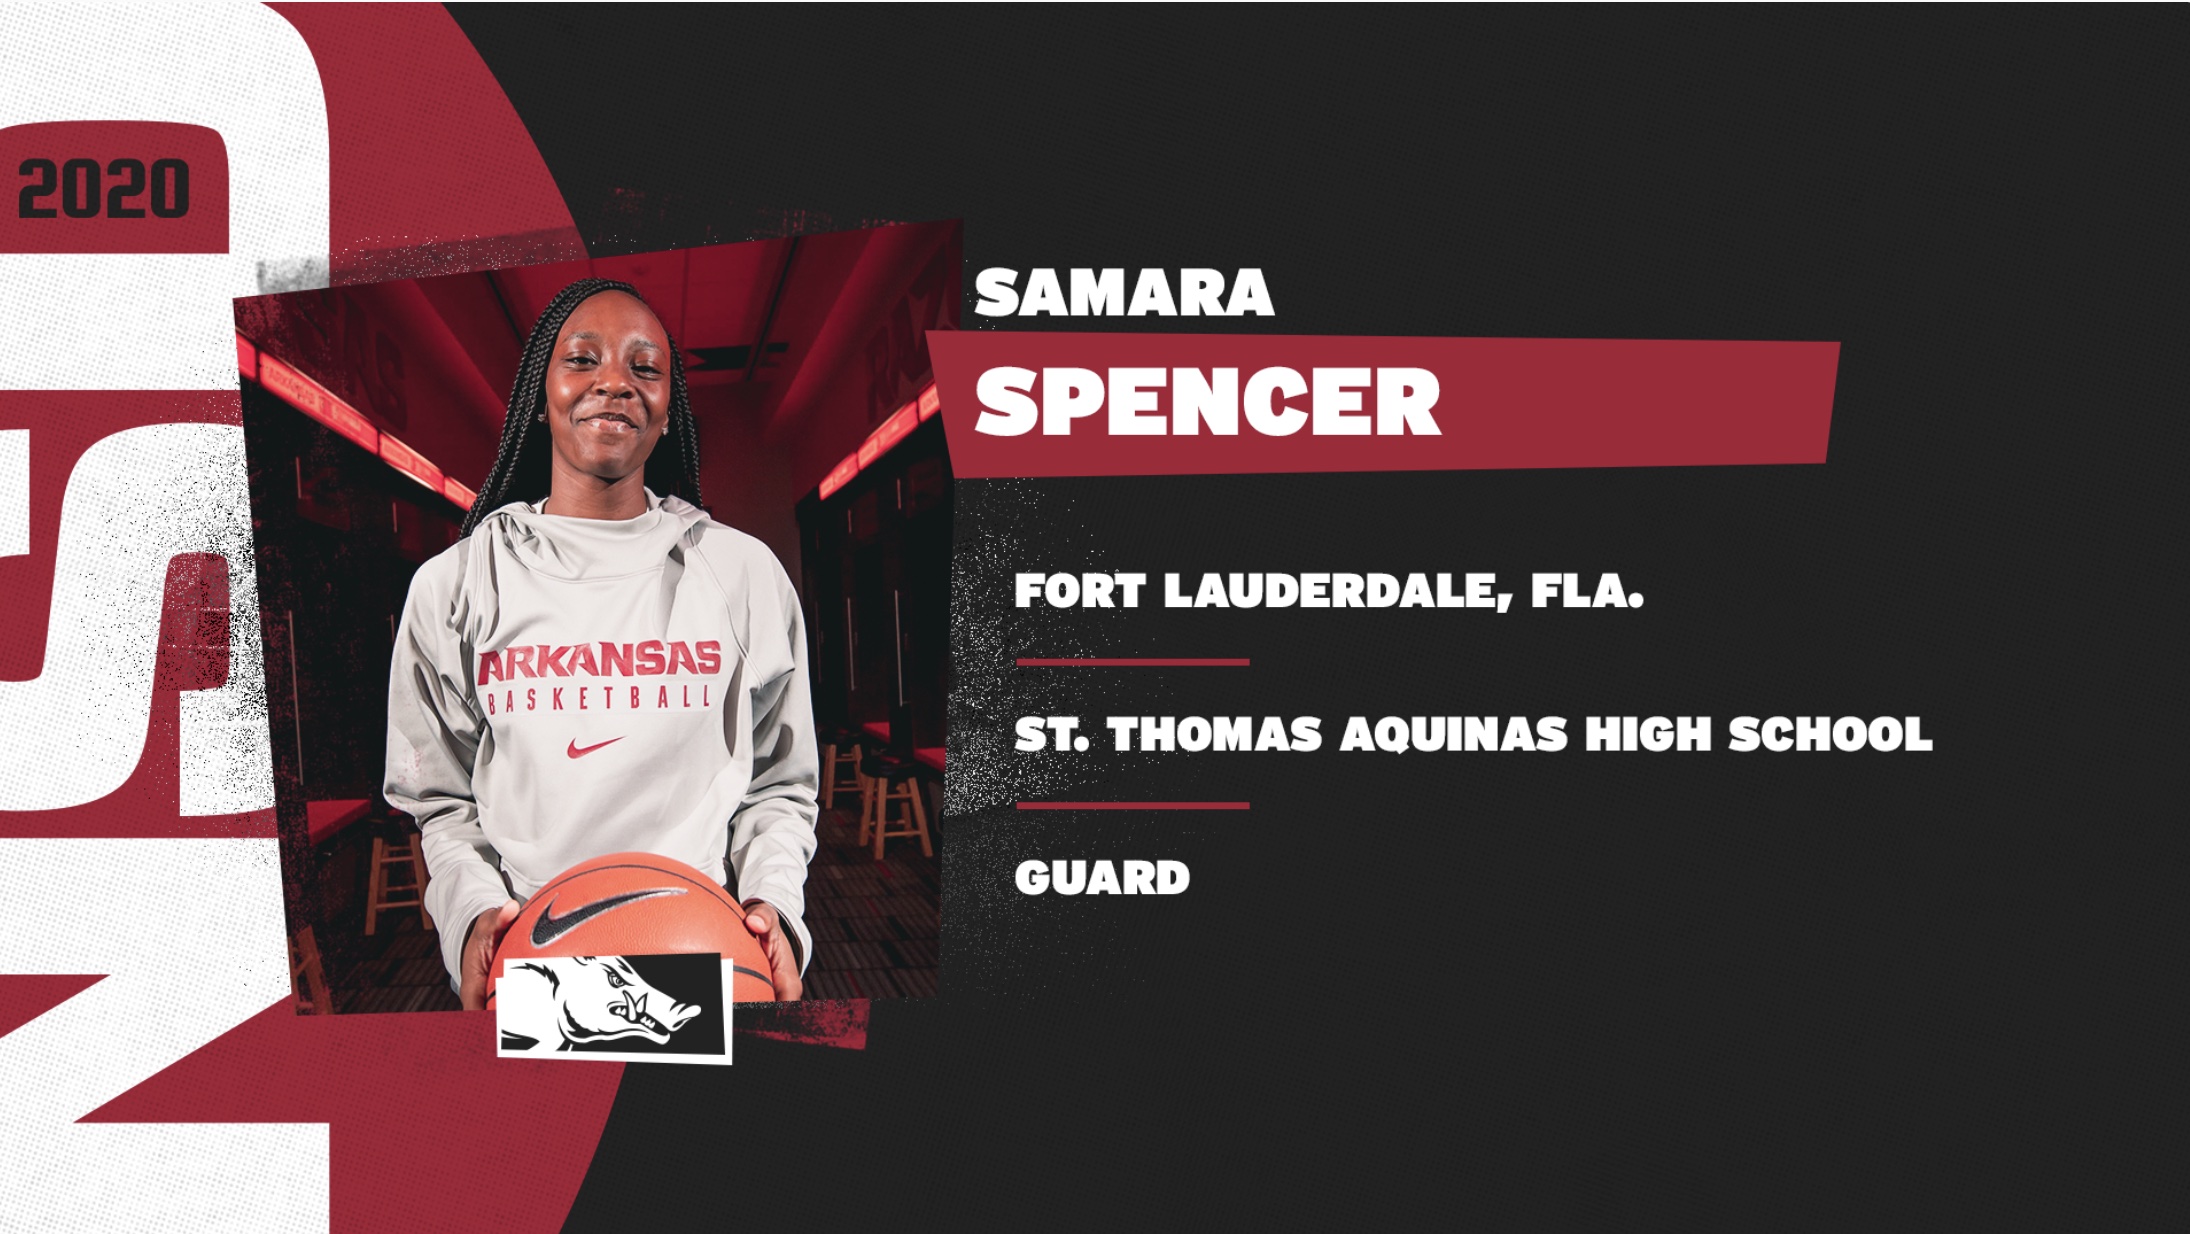 Samara Spencer Signs with Arkansas